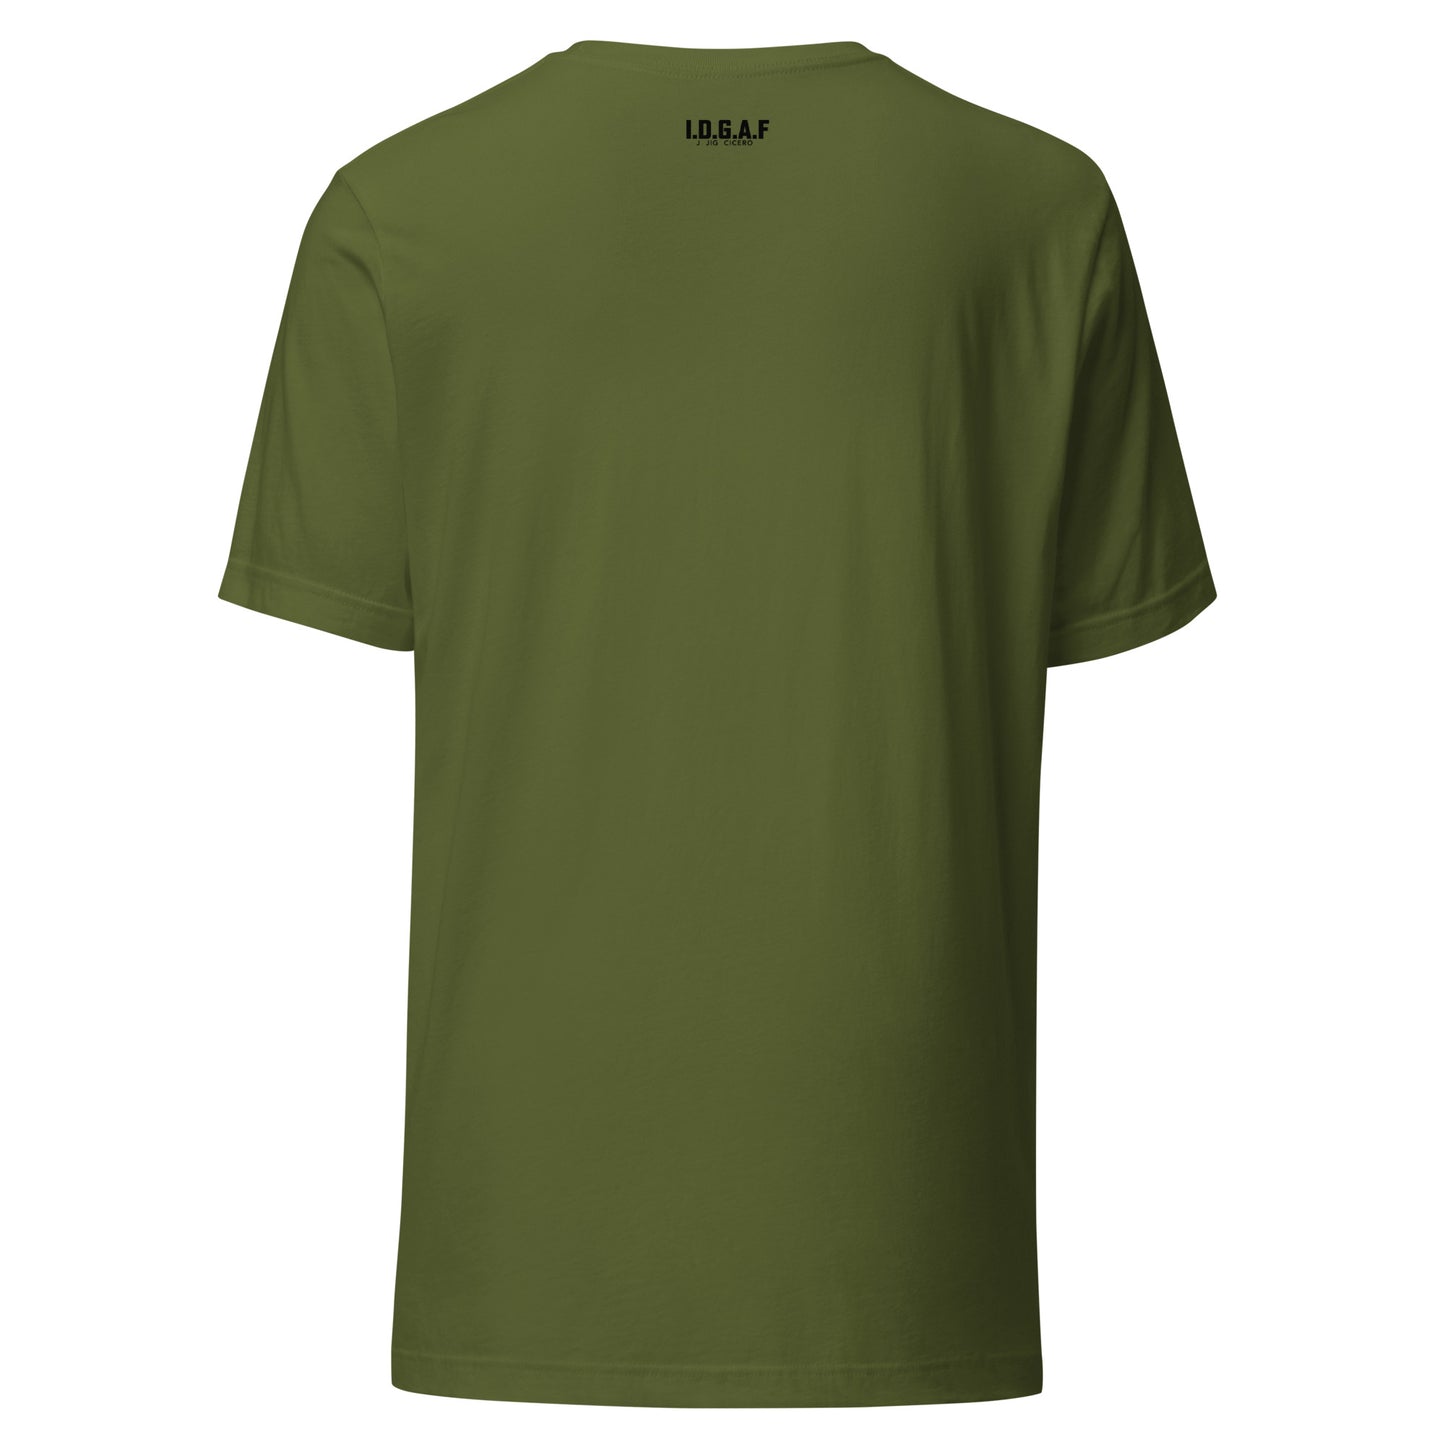 IDGAF Affirmations Unisex T-Shirt